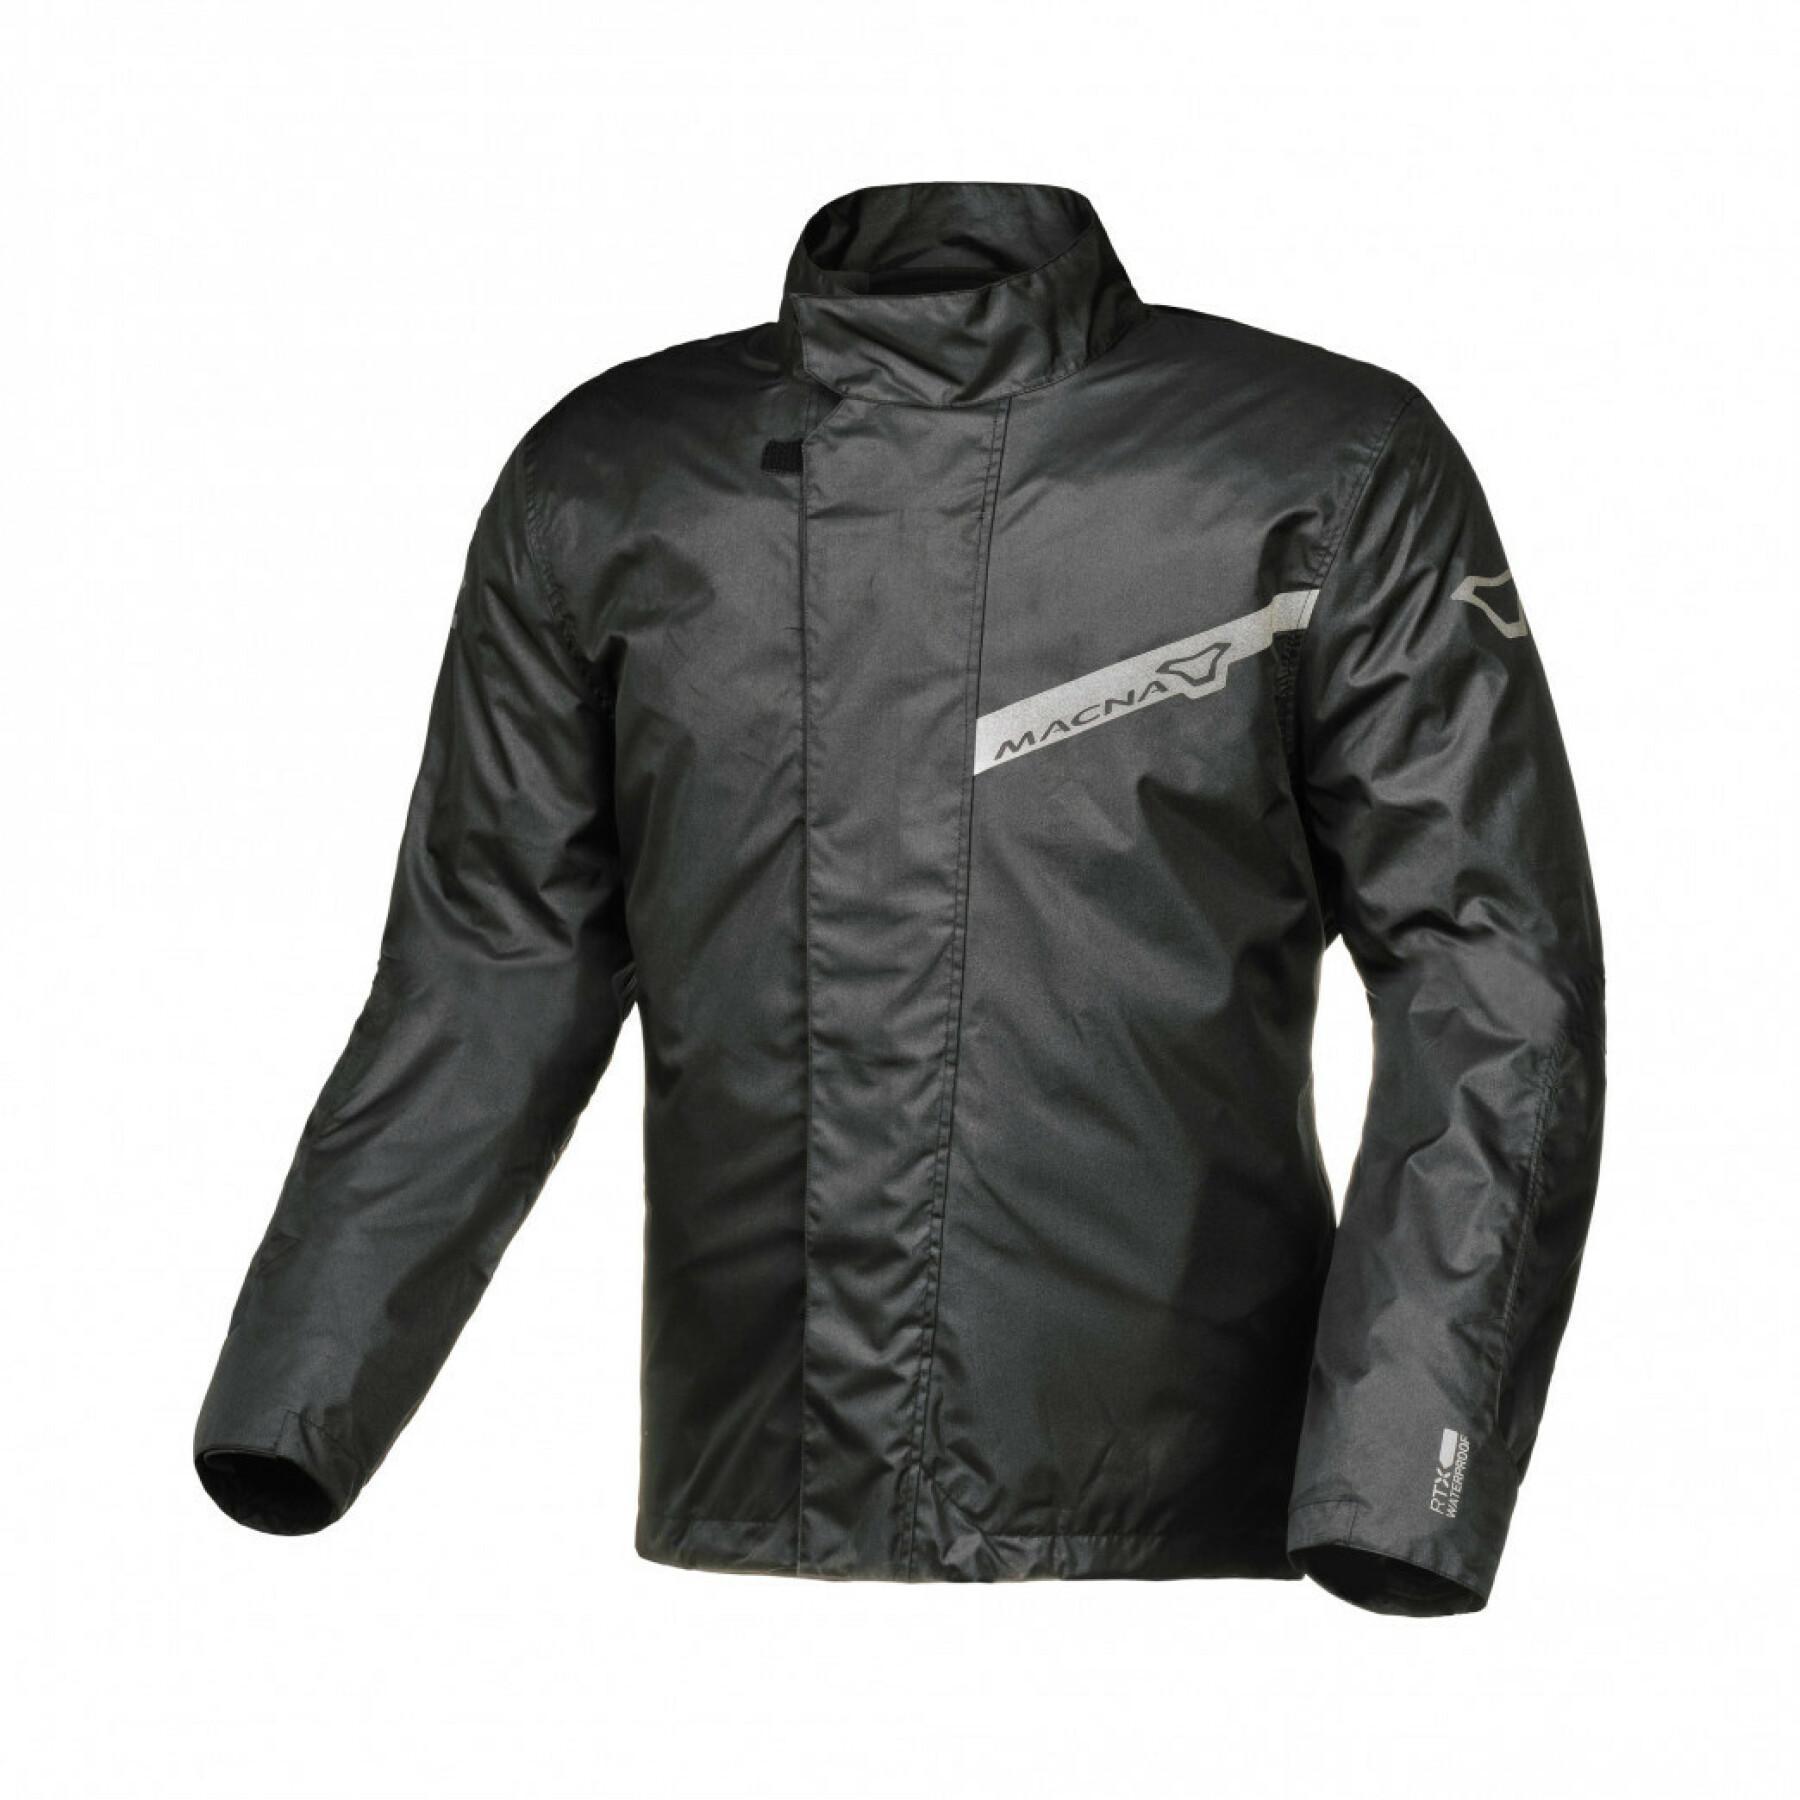 Waterproof jacket Macna spray